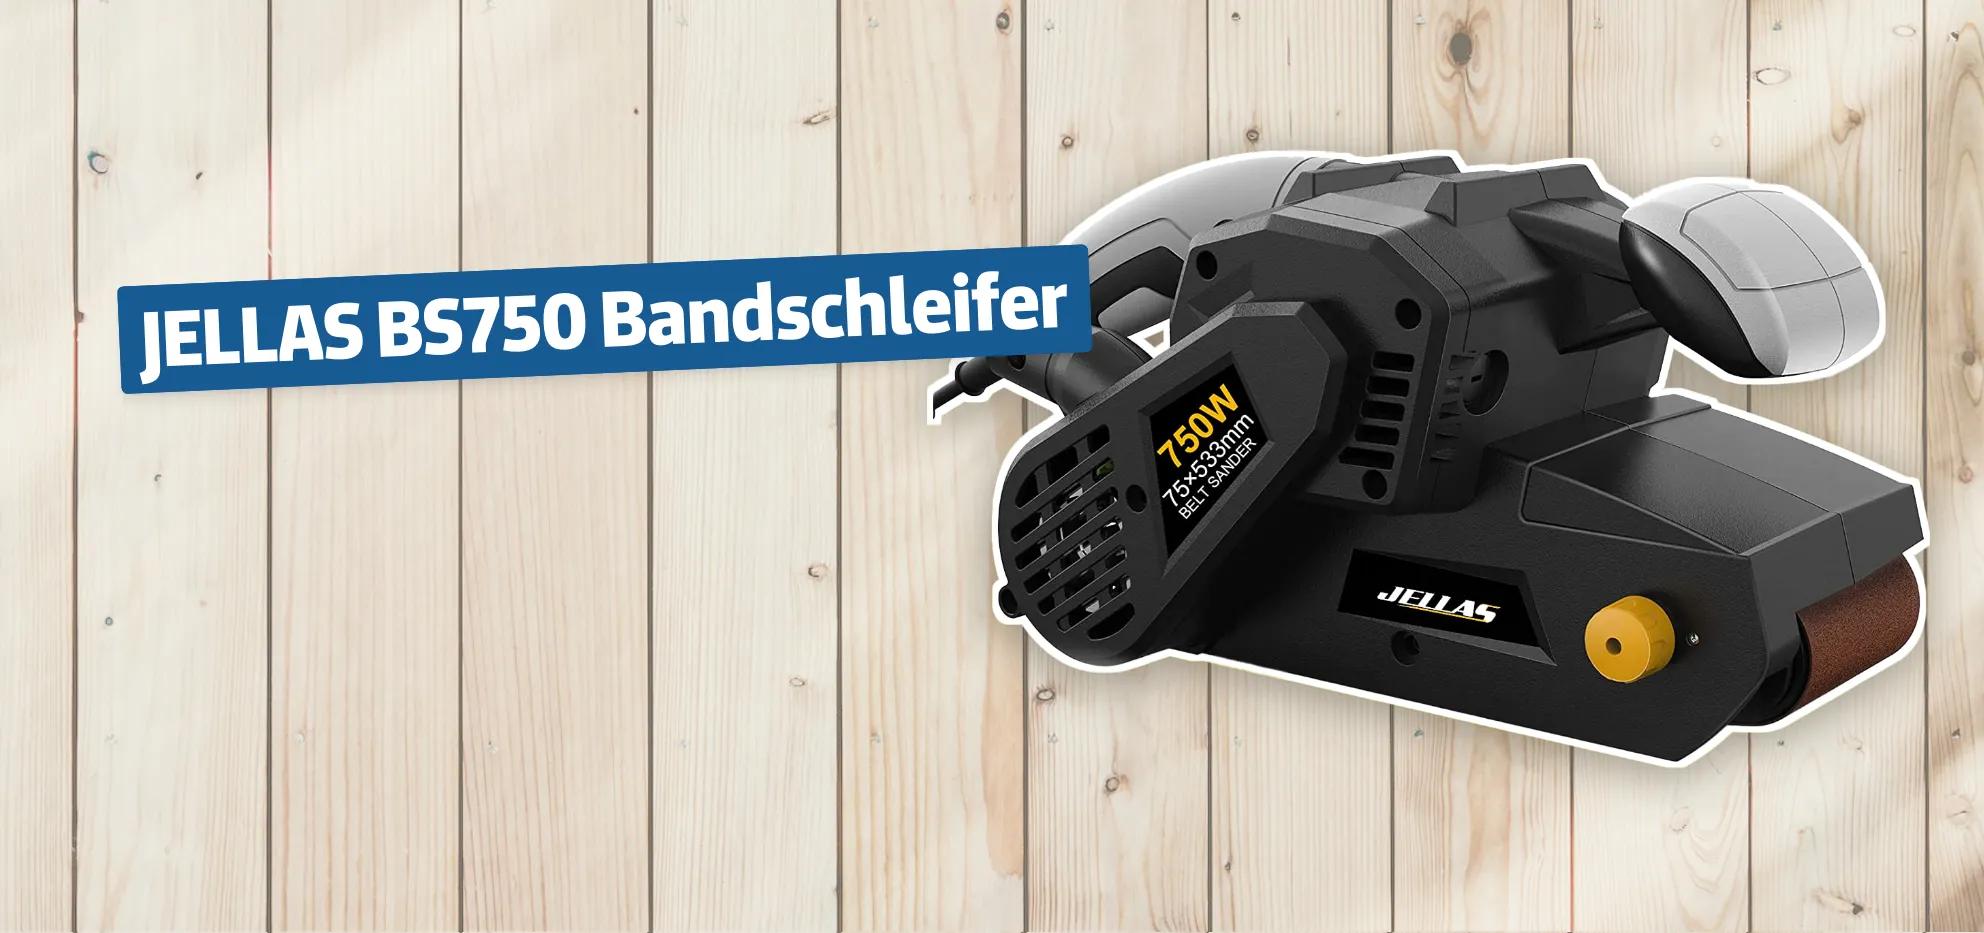 JELLAS BS750 Bandschleifer